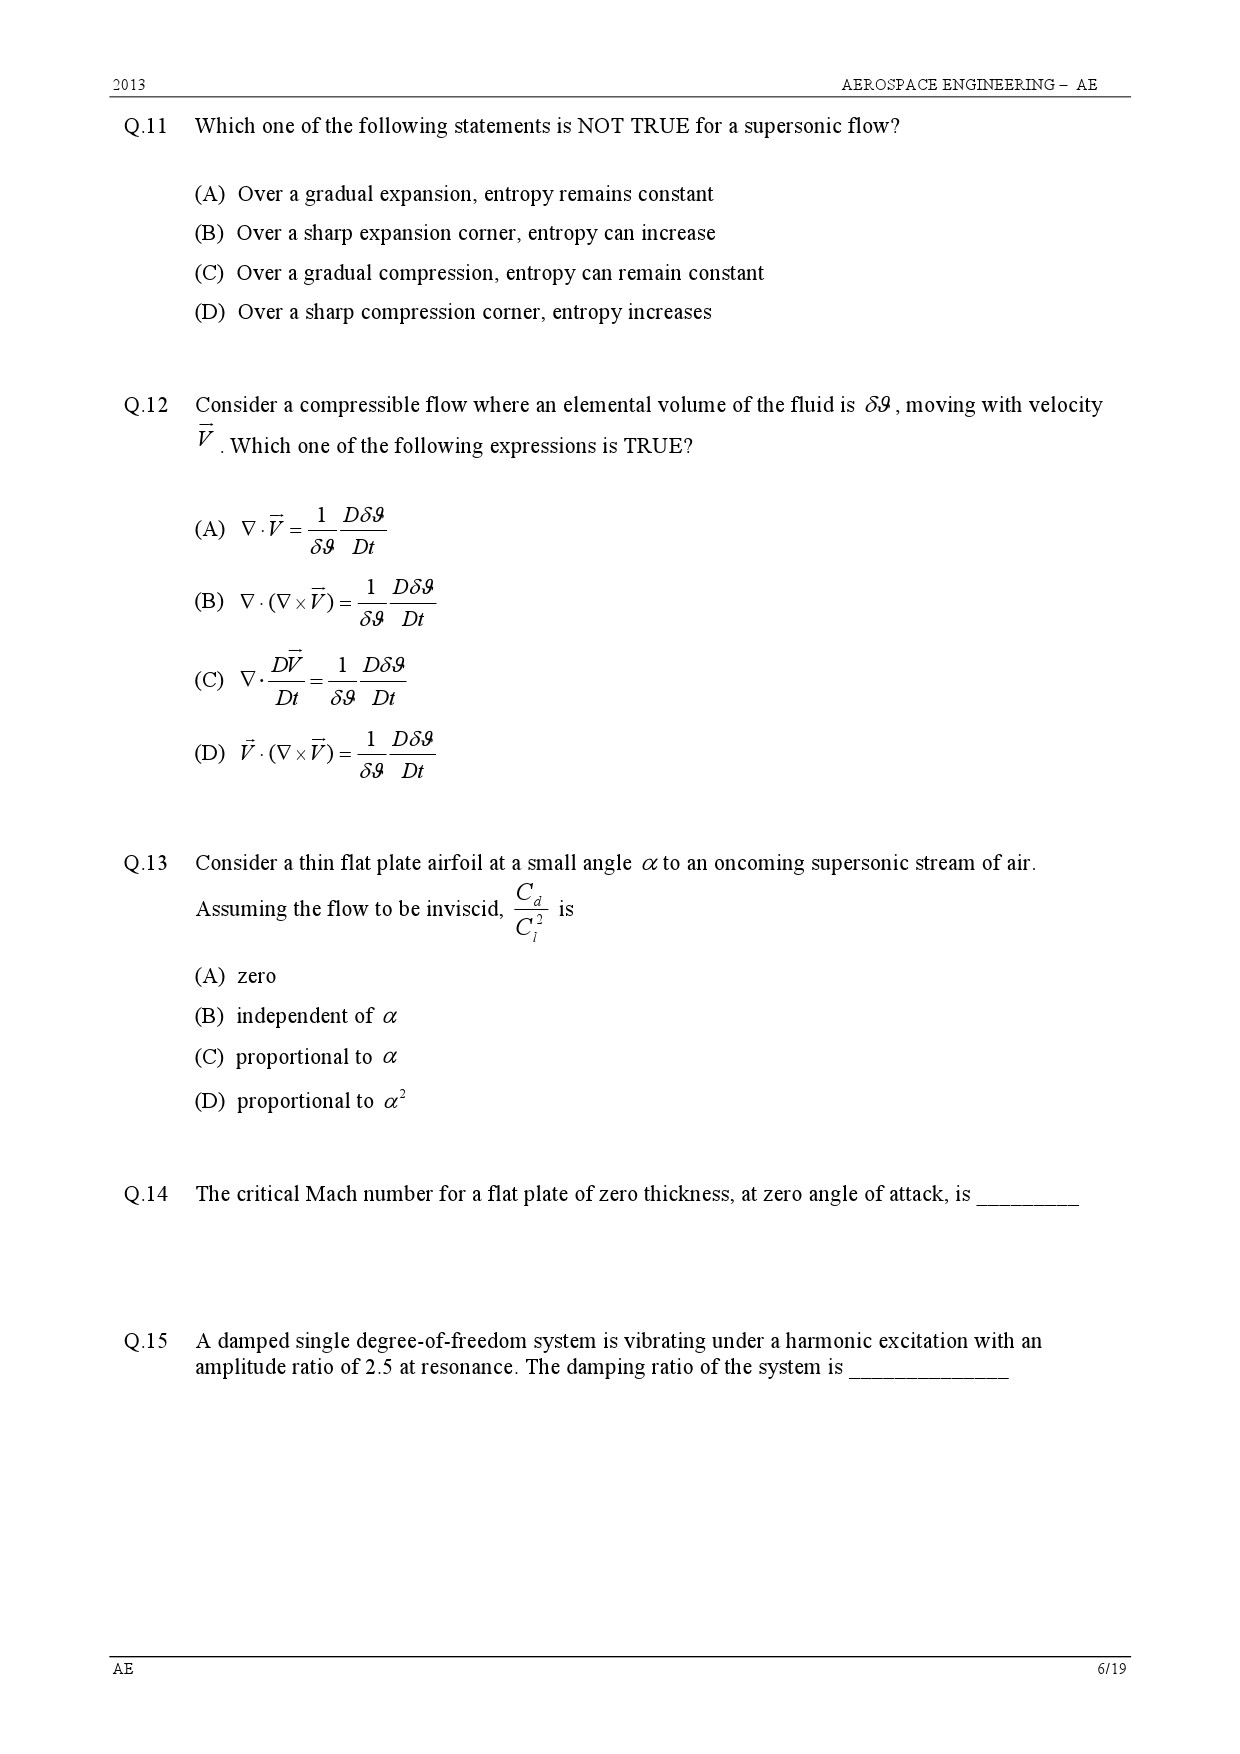 GATE Exam 2013 Aerospace Engineering Question Paper 6